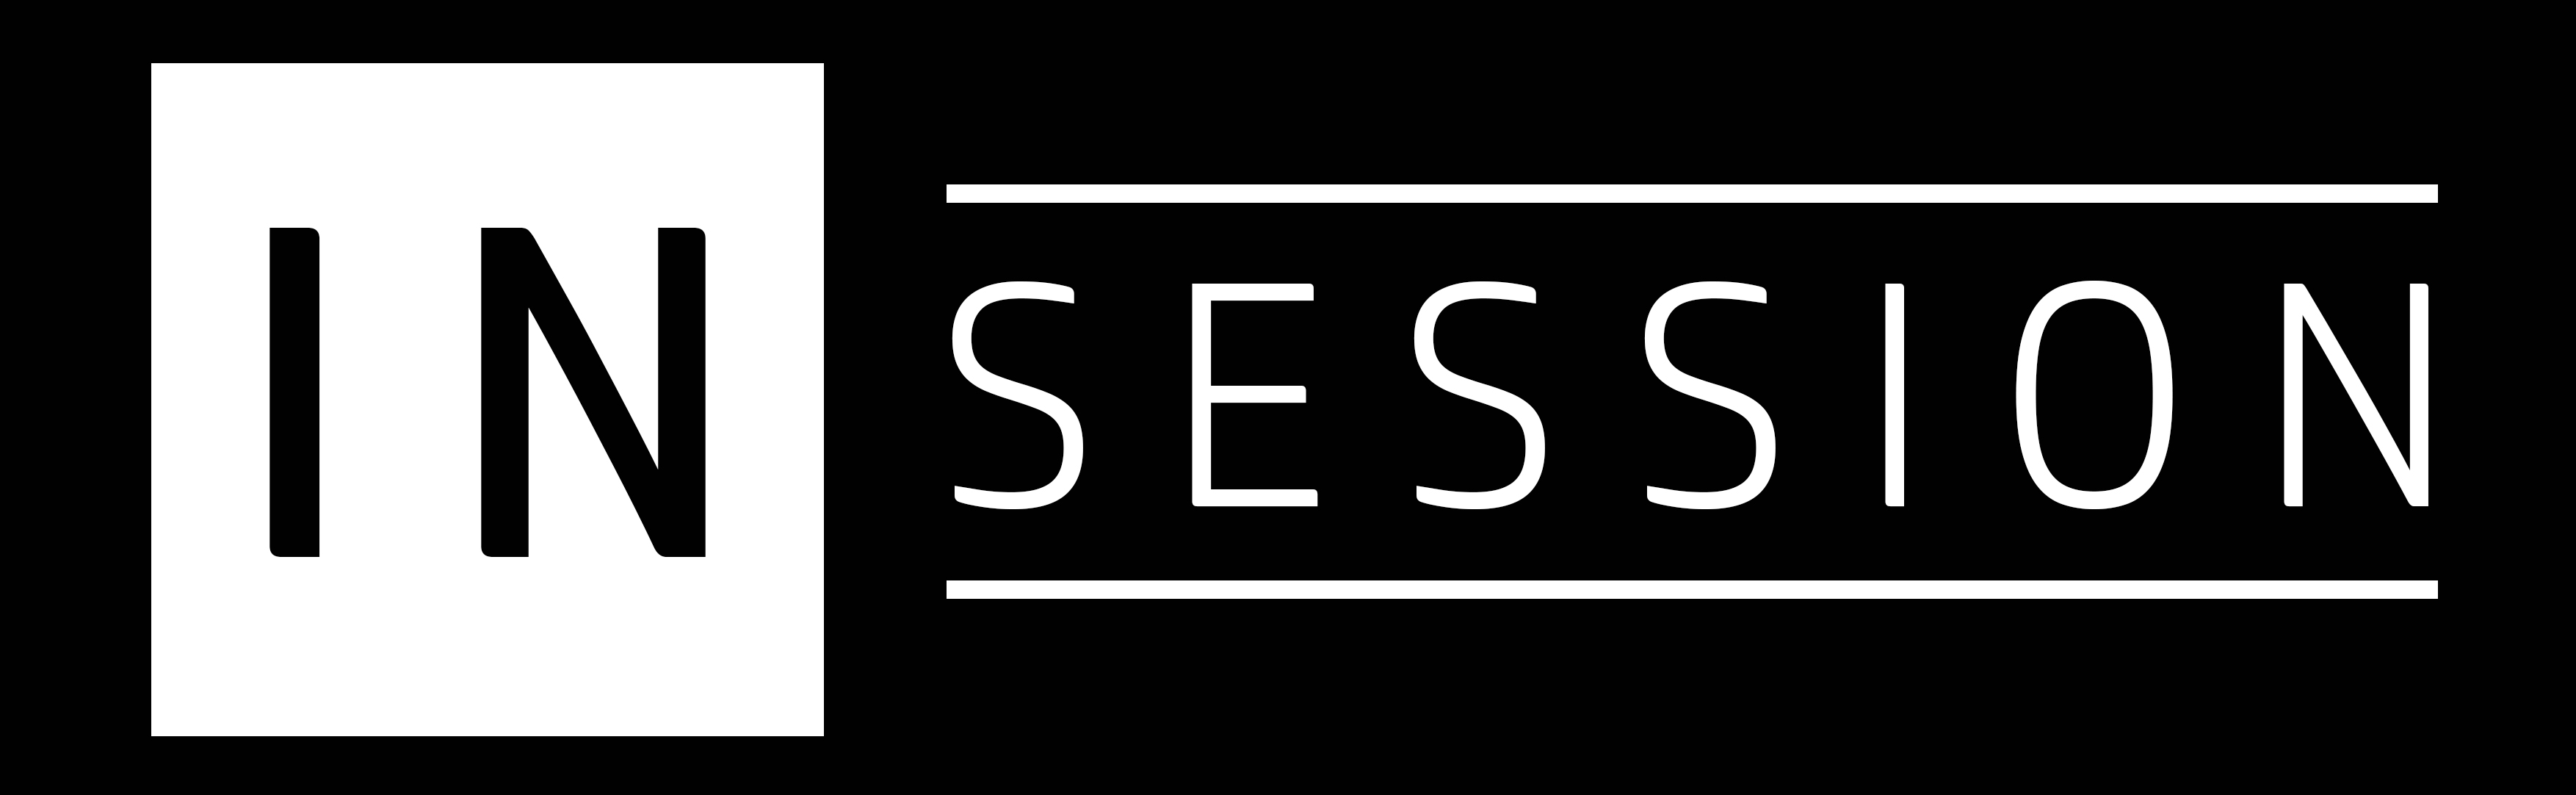 In Session logo